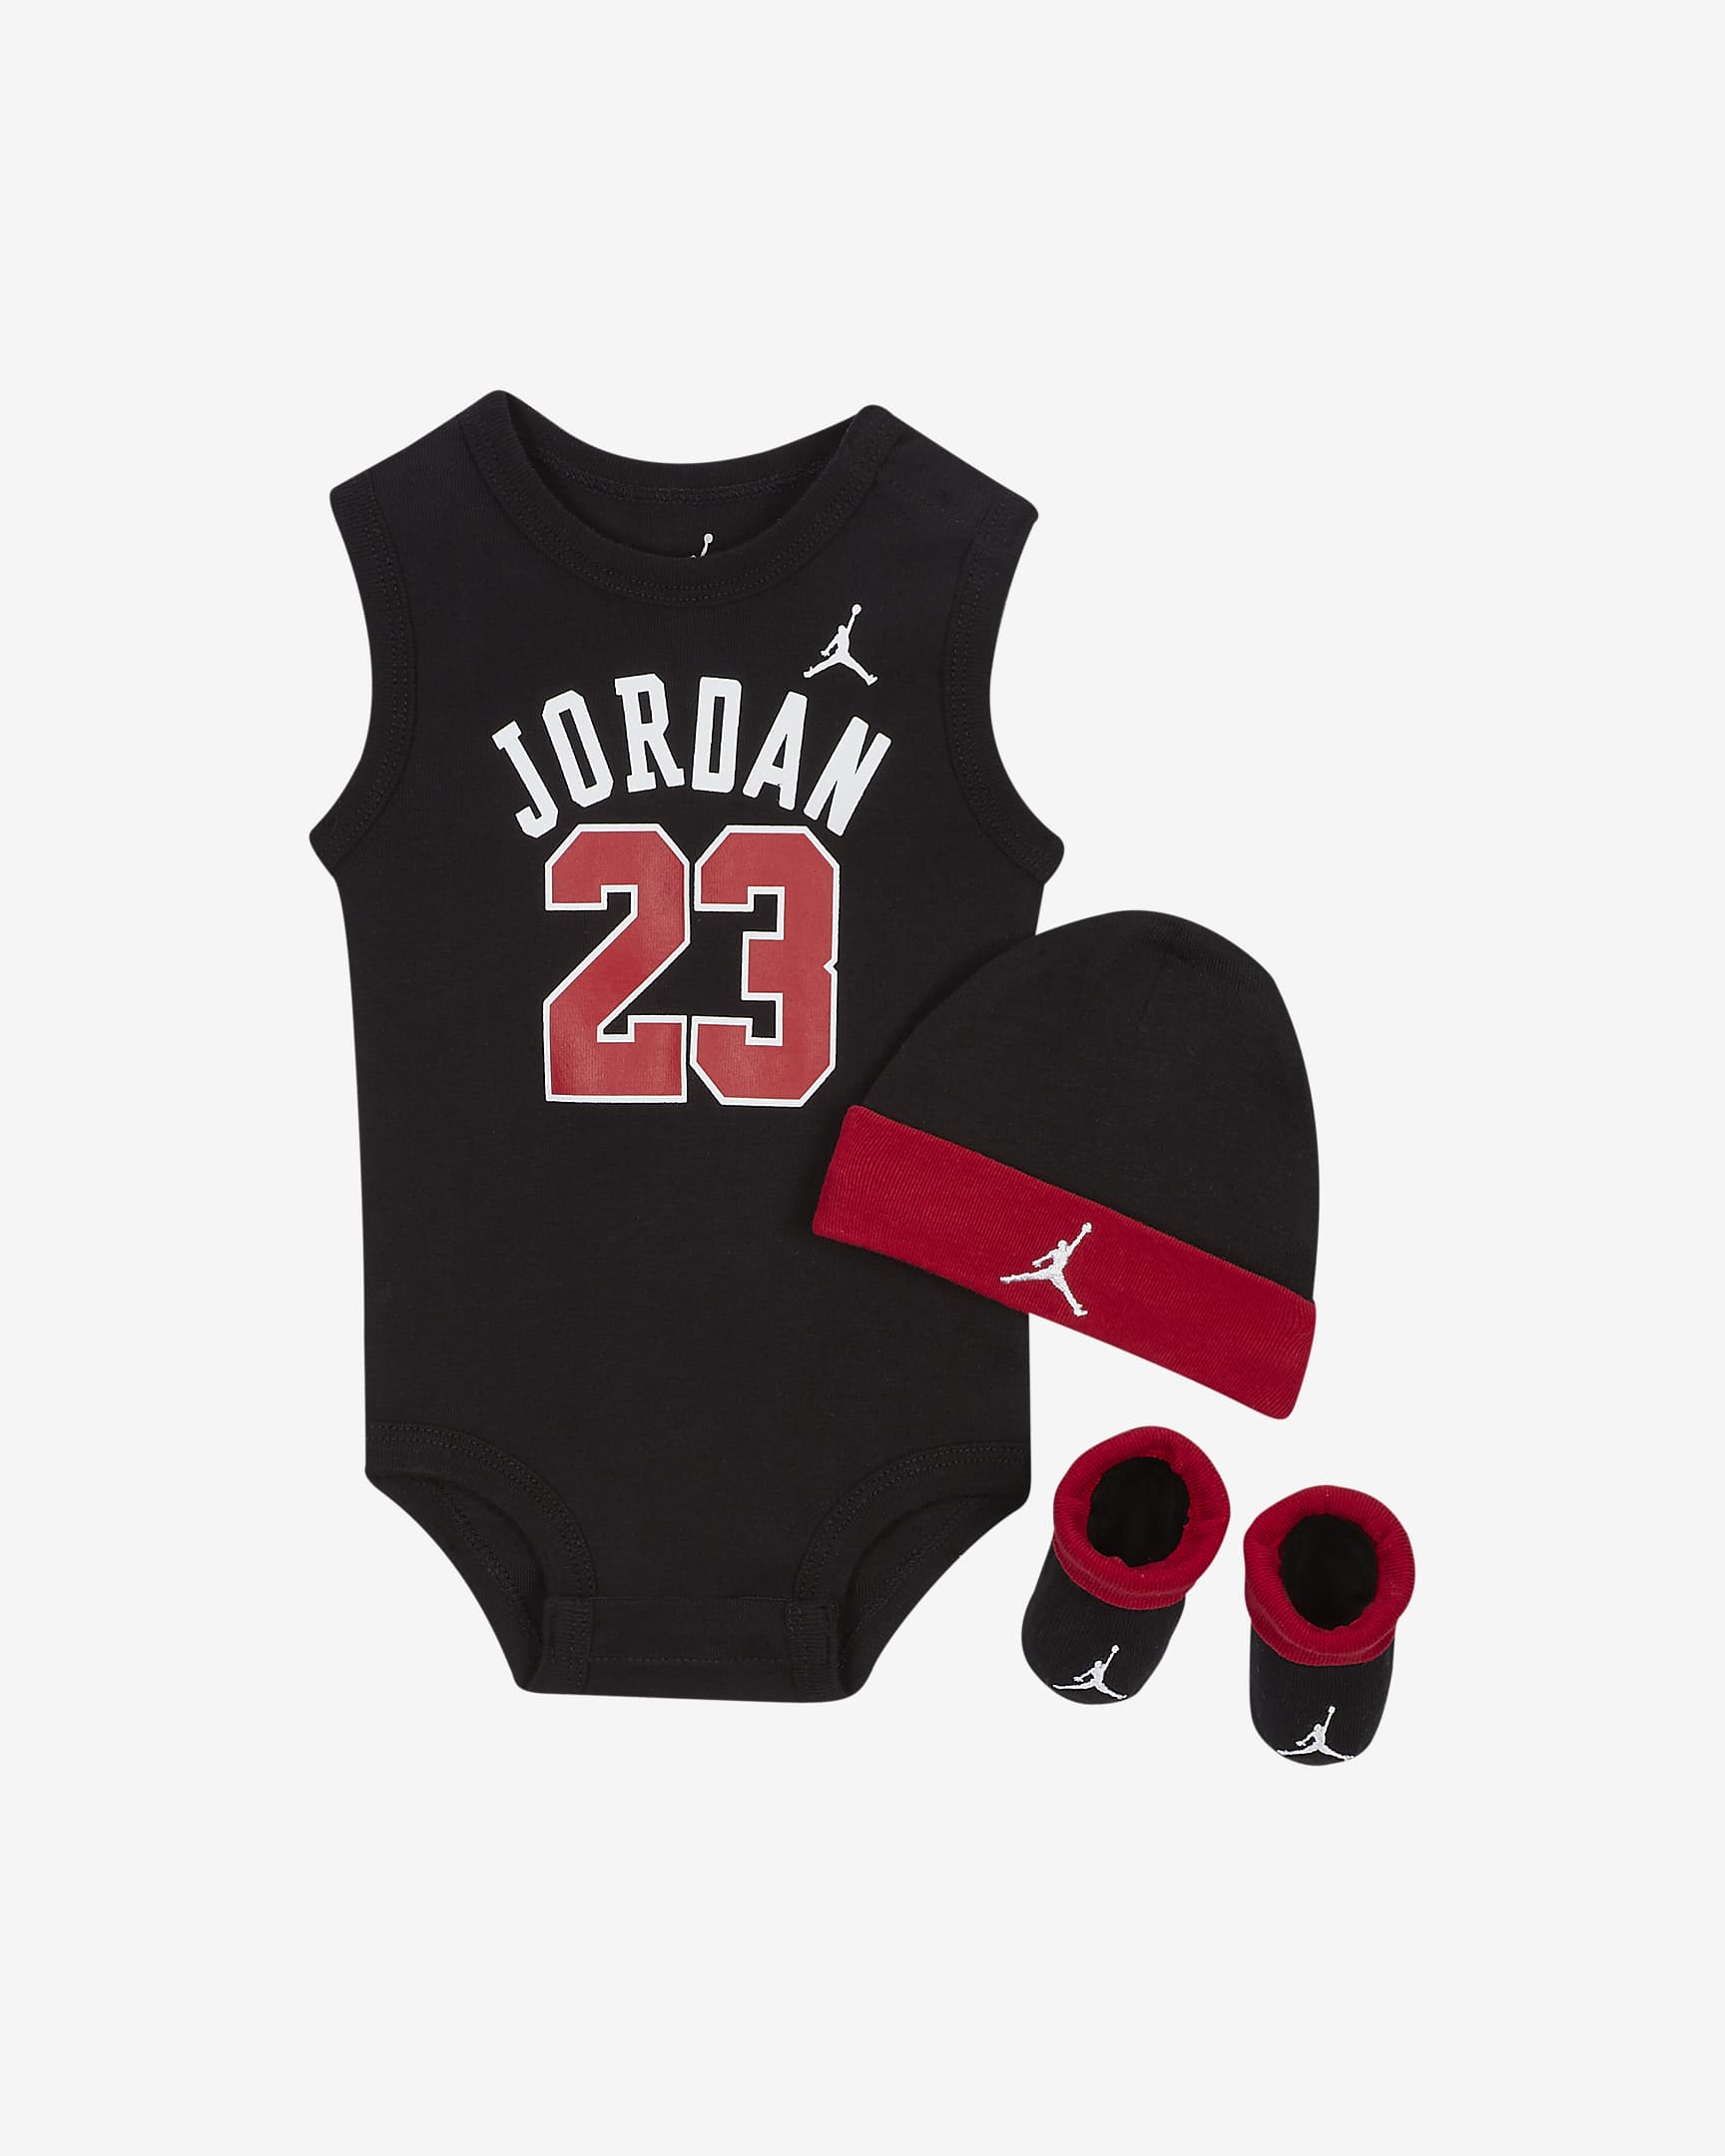 Jordan 23 coffret 3 pièces black red